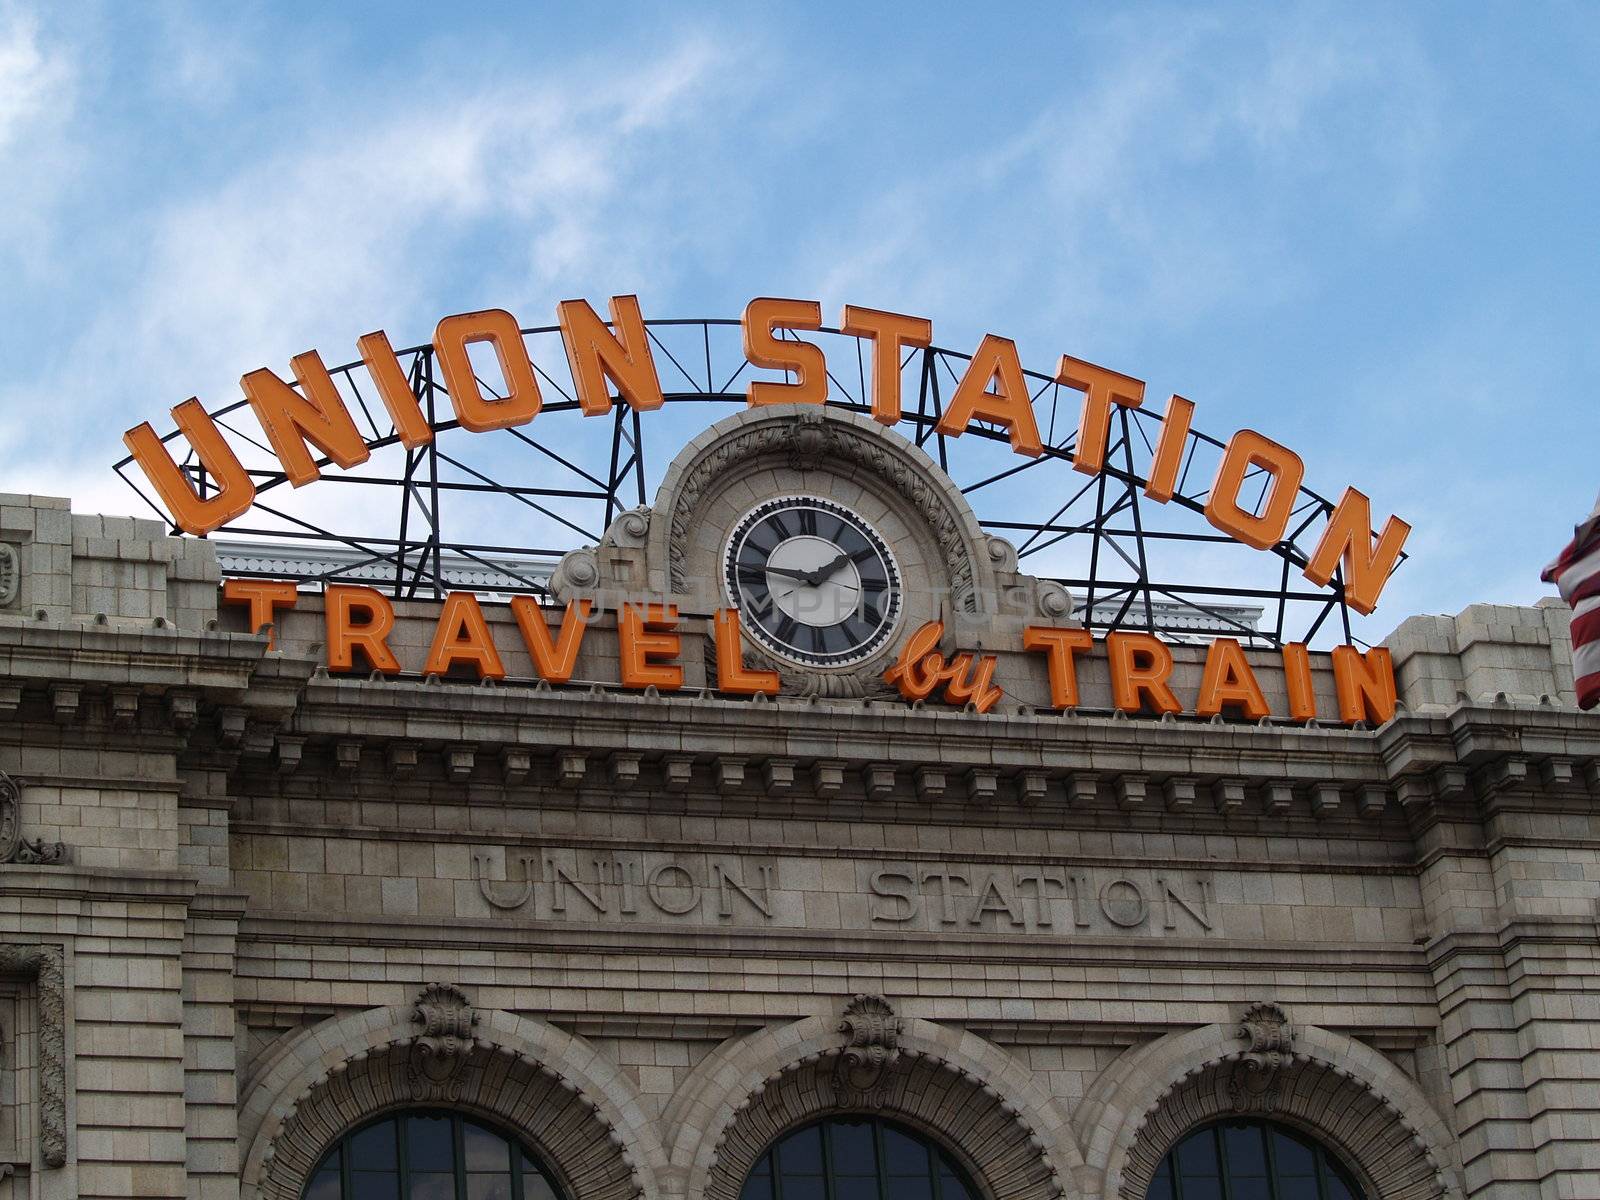 Union station by chaosmediamgt